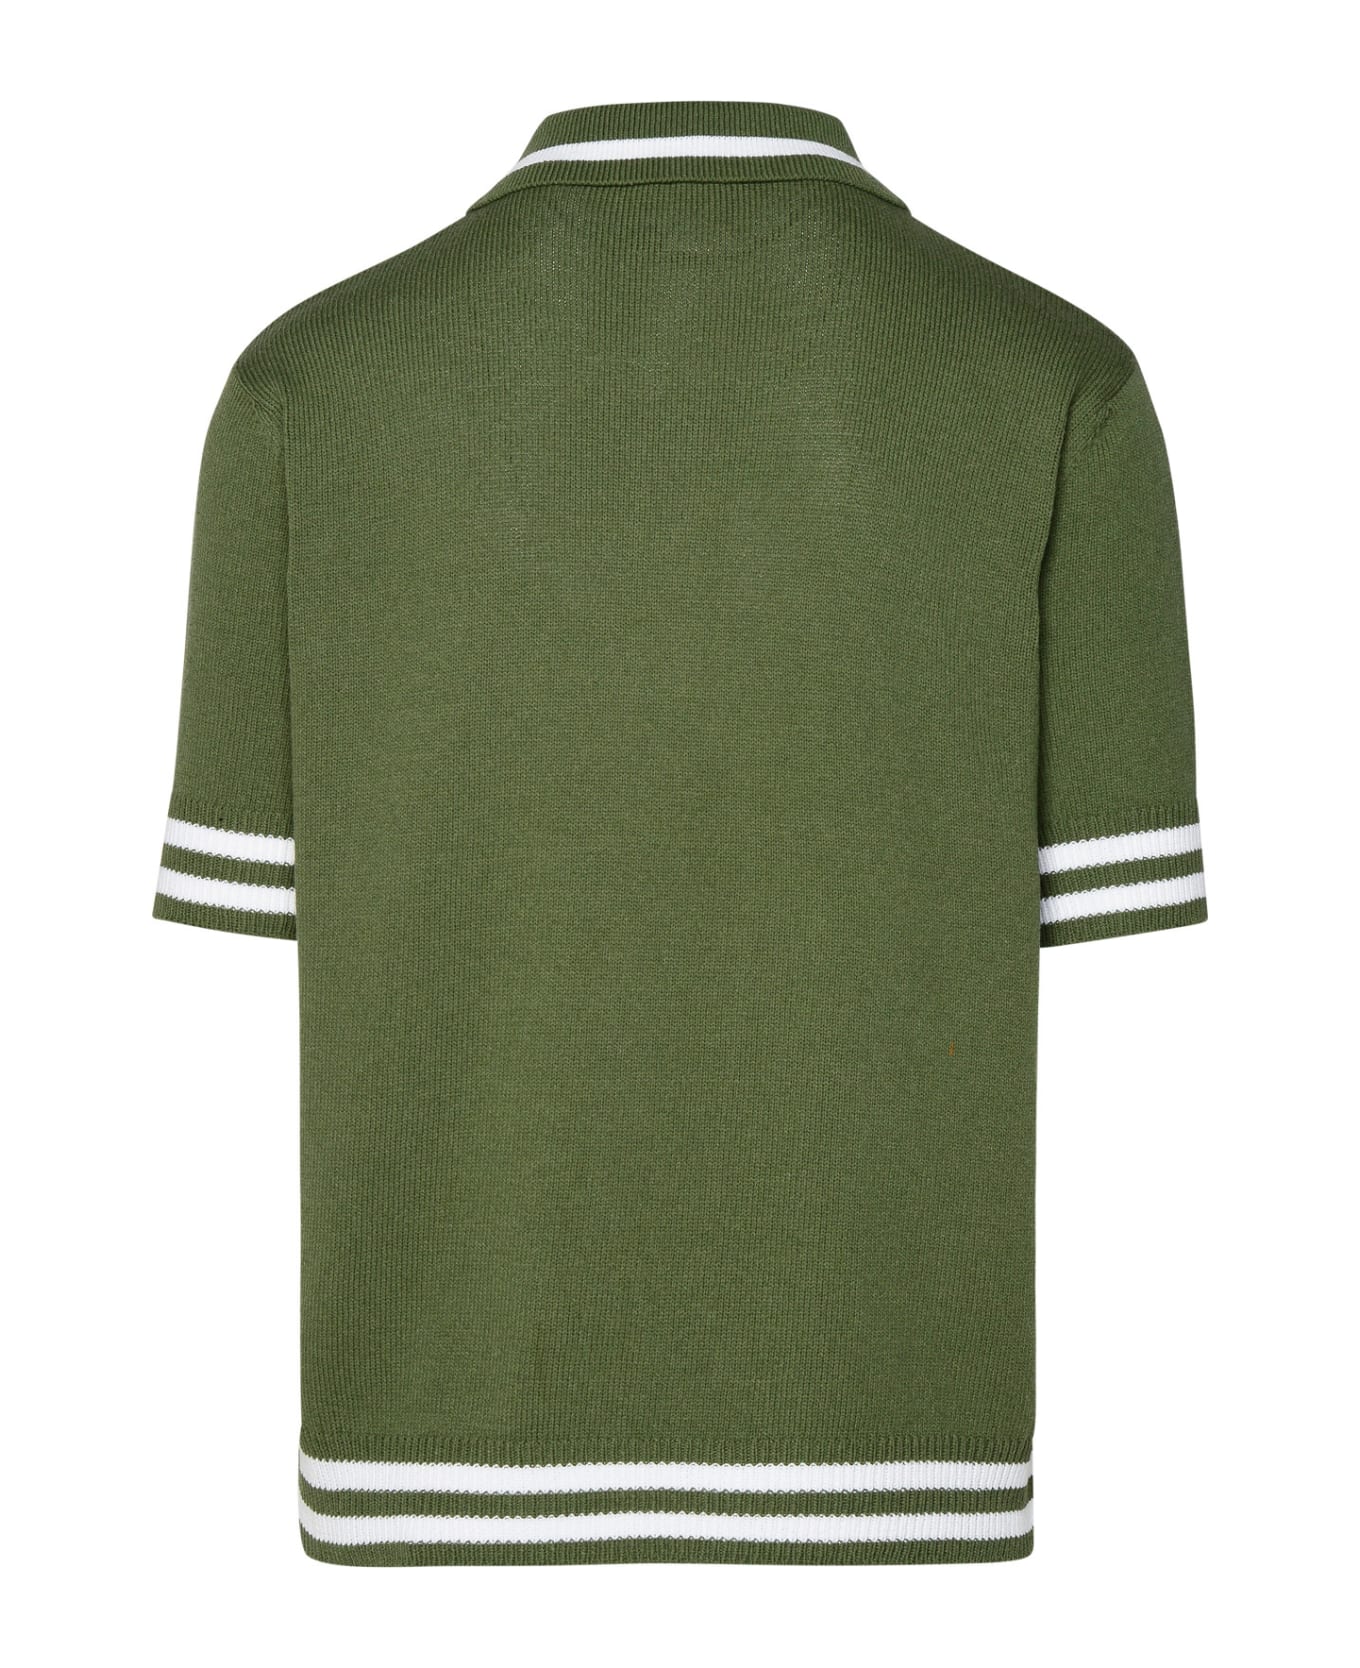 Balmain Polo Shirt In Green Cotton Blend - Green